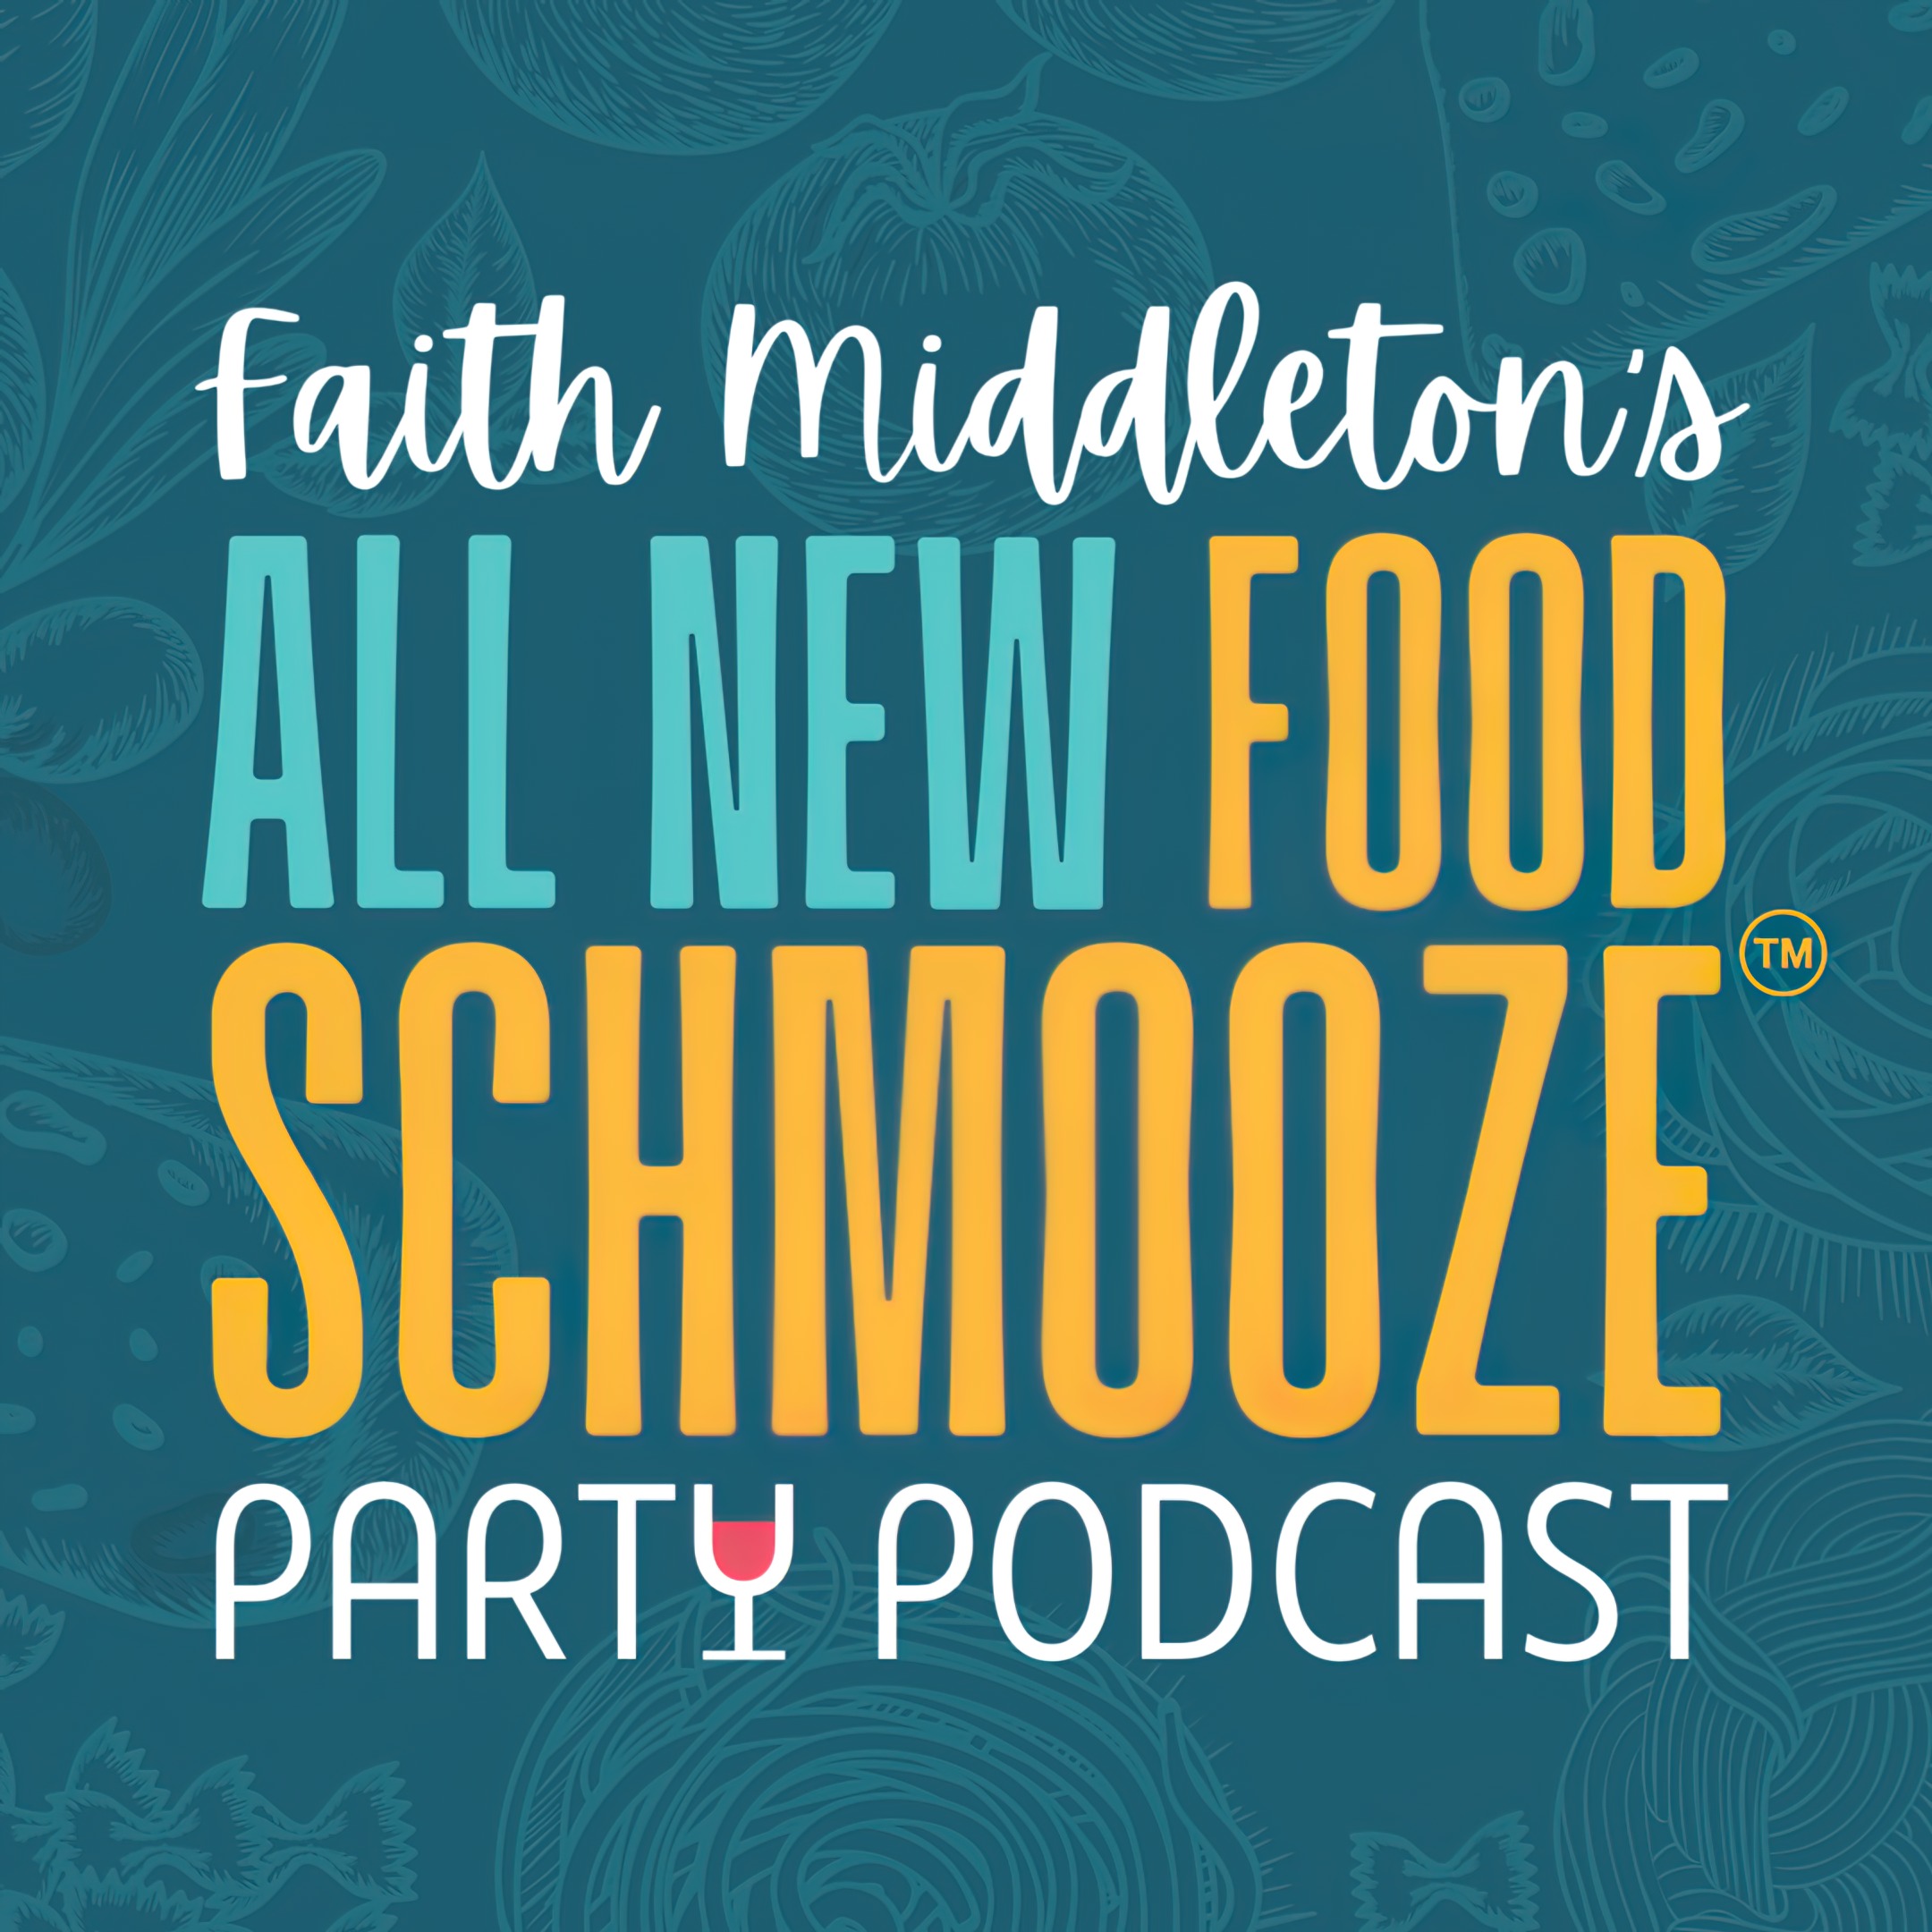 Faith Middleton’s All-New Food Schmooze Party Podcast